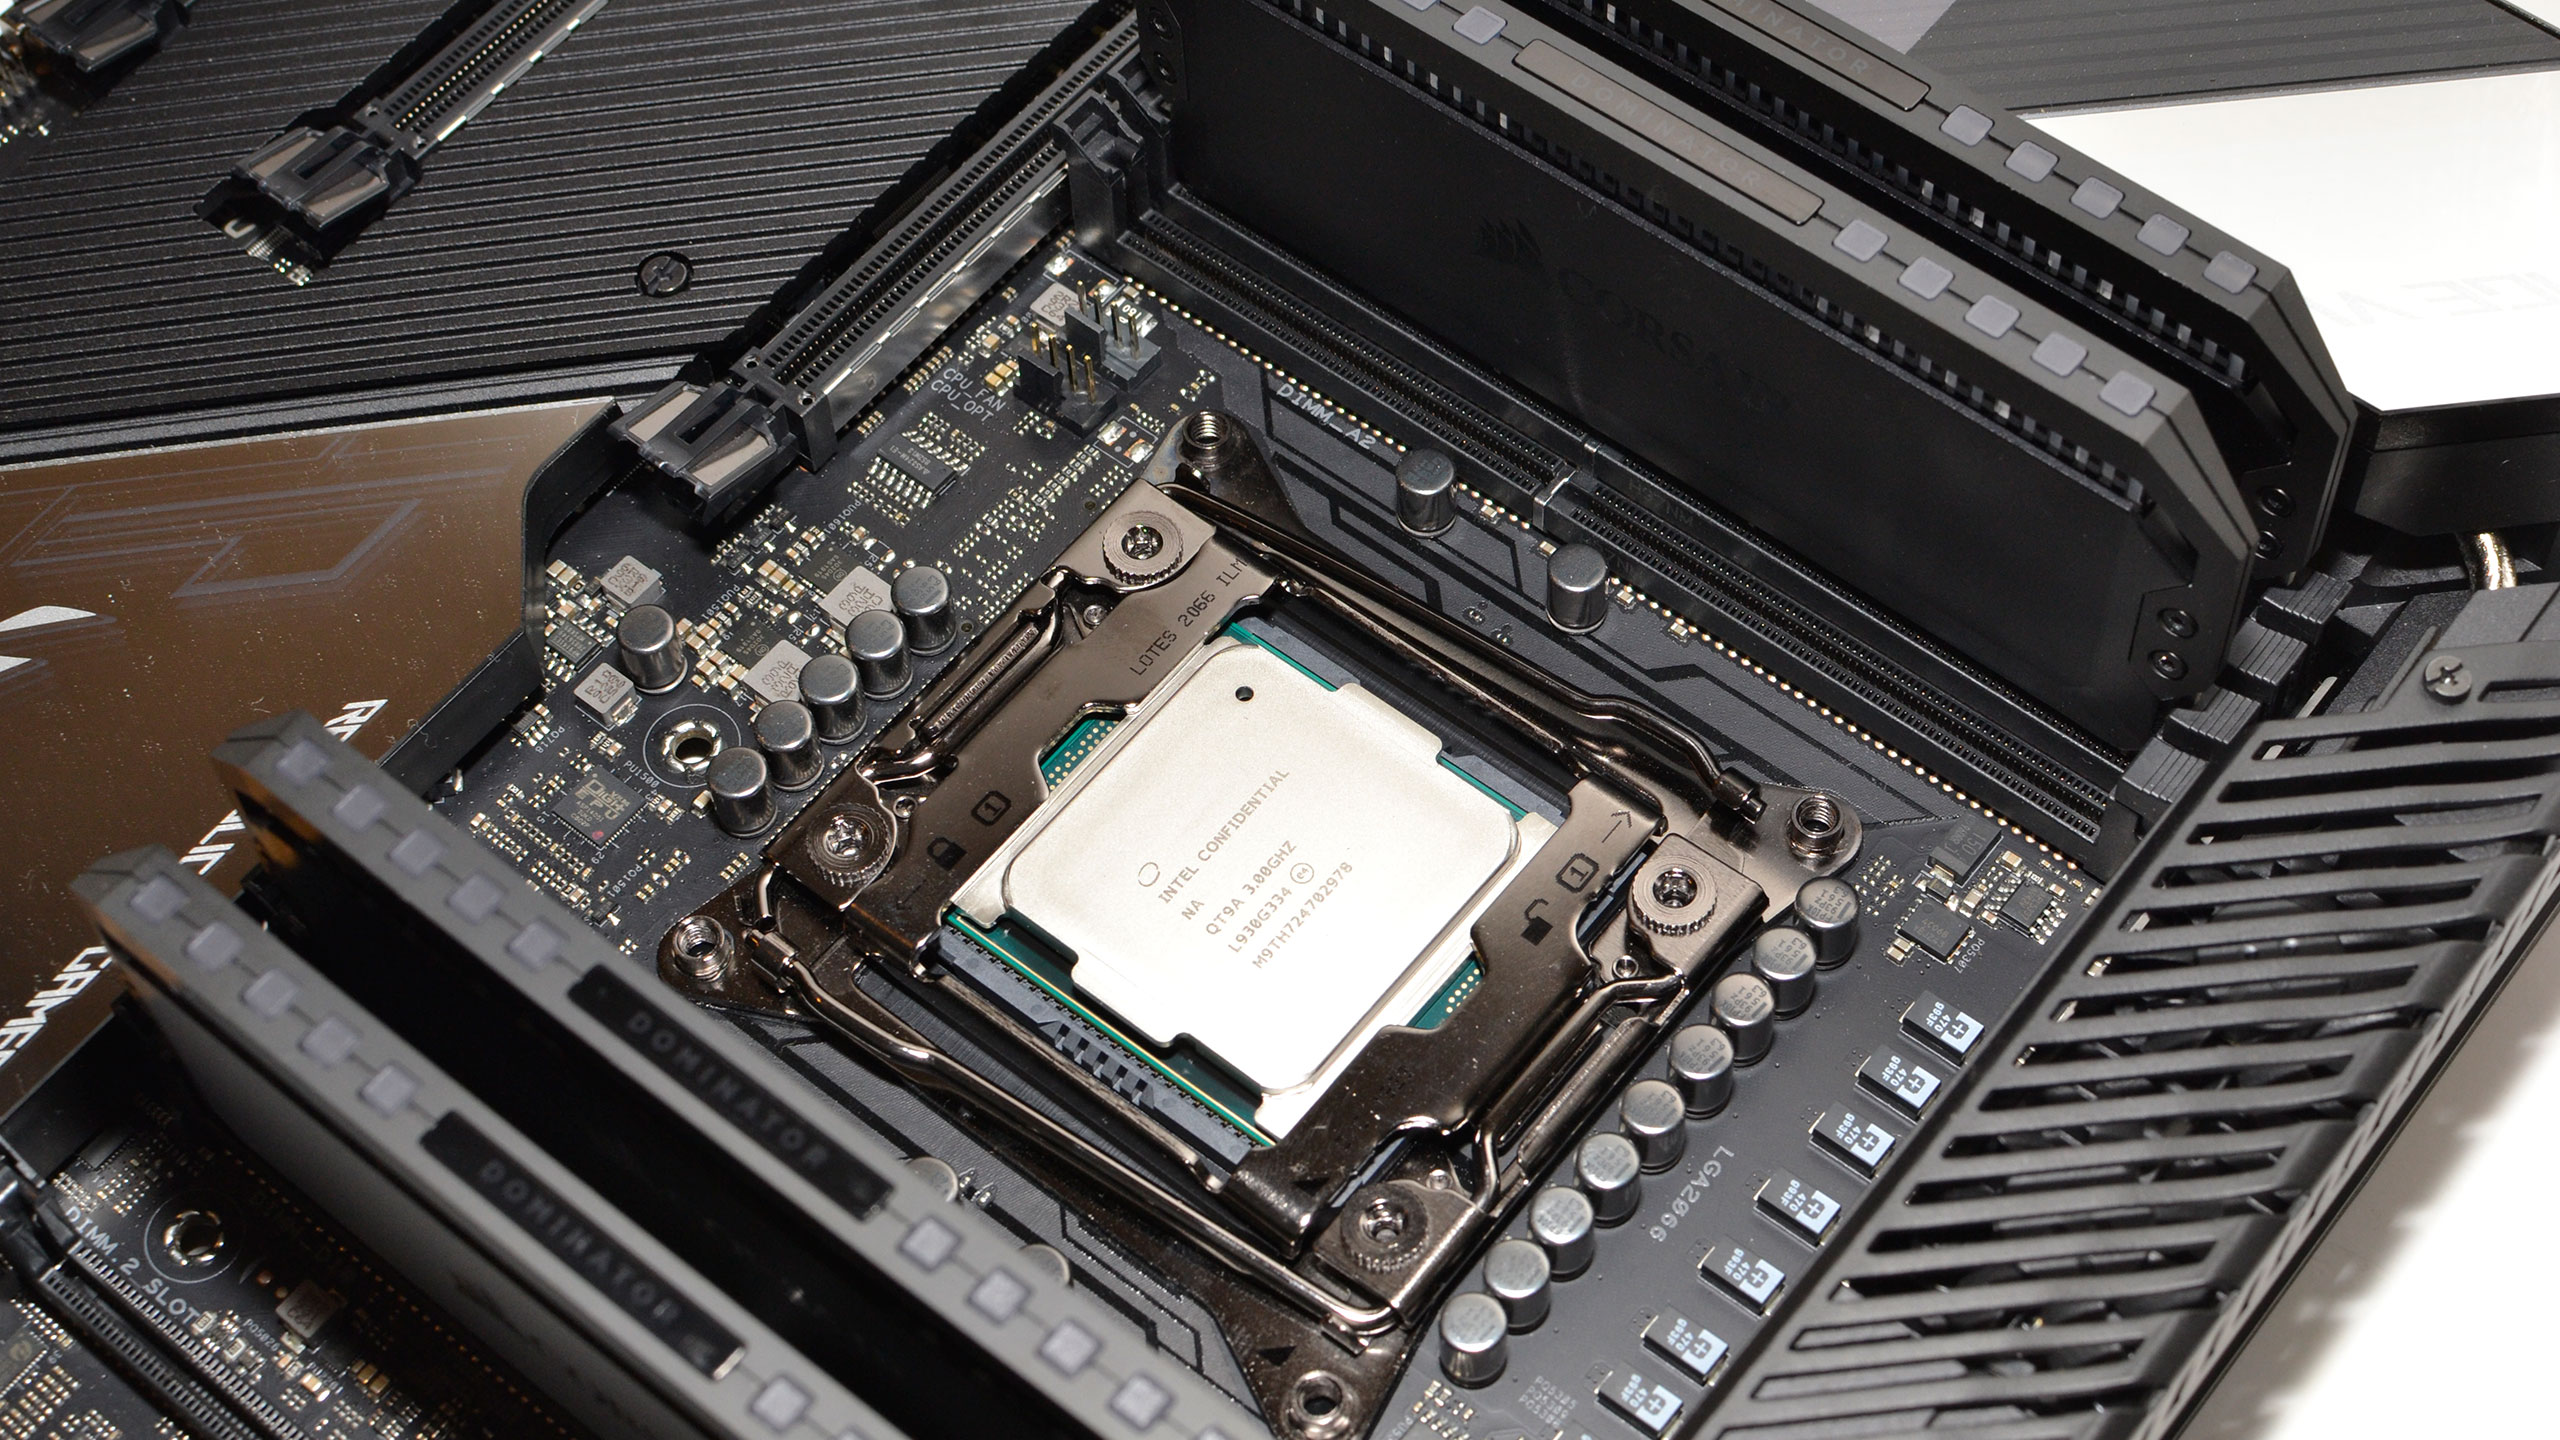 Intel Core i5-10600KF 4.1GHz CPU Silver